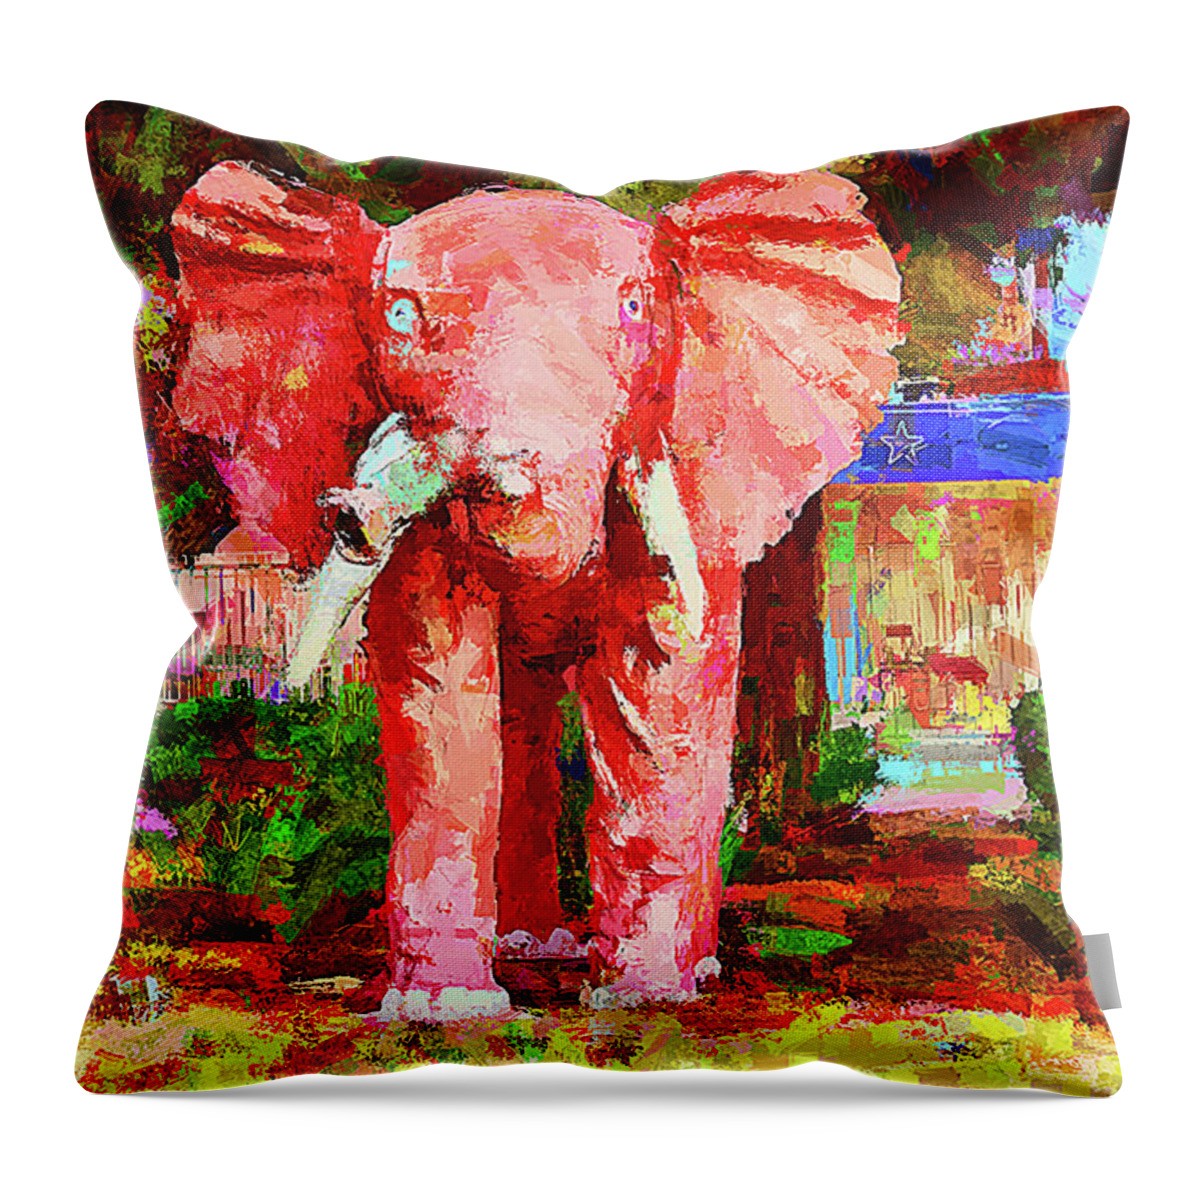 Las Vegas Throw Pillow featuring the digital art Las Vegas Pink Elephant by Tatiana Travelways